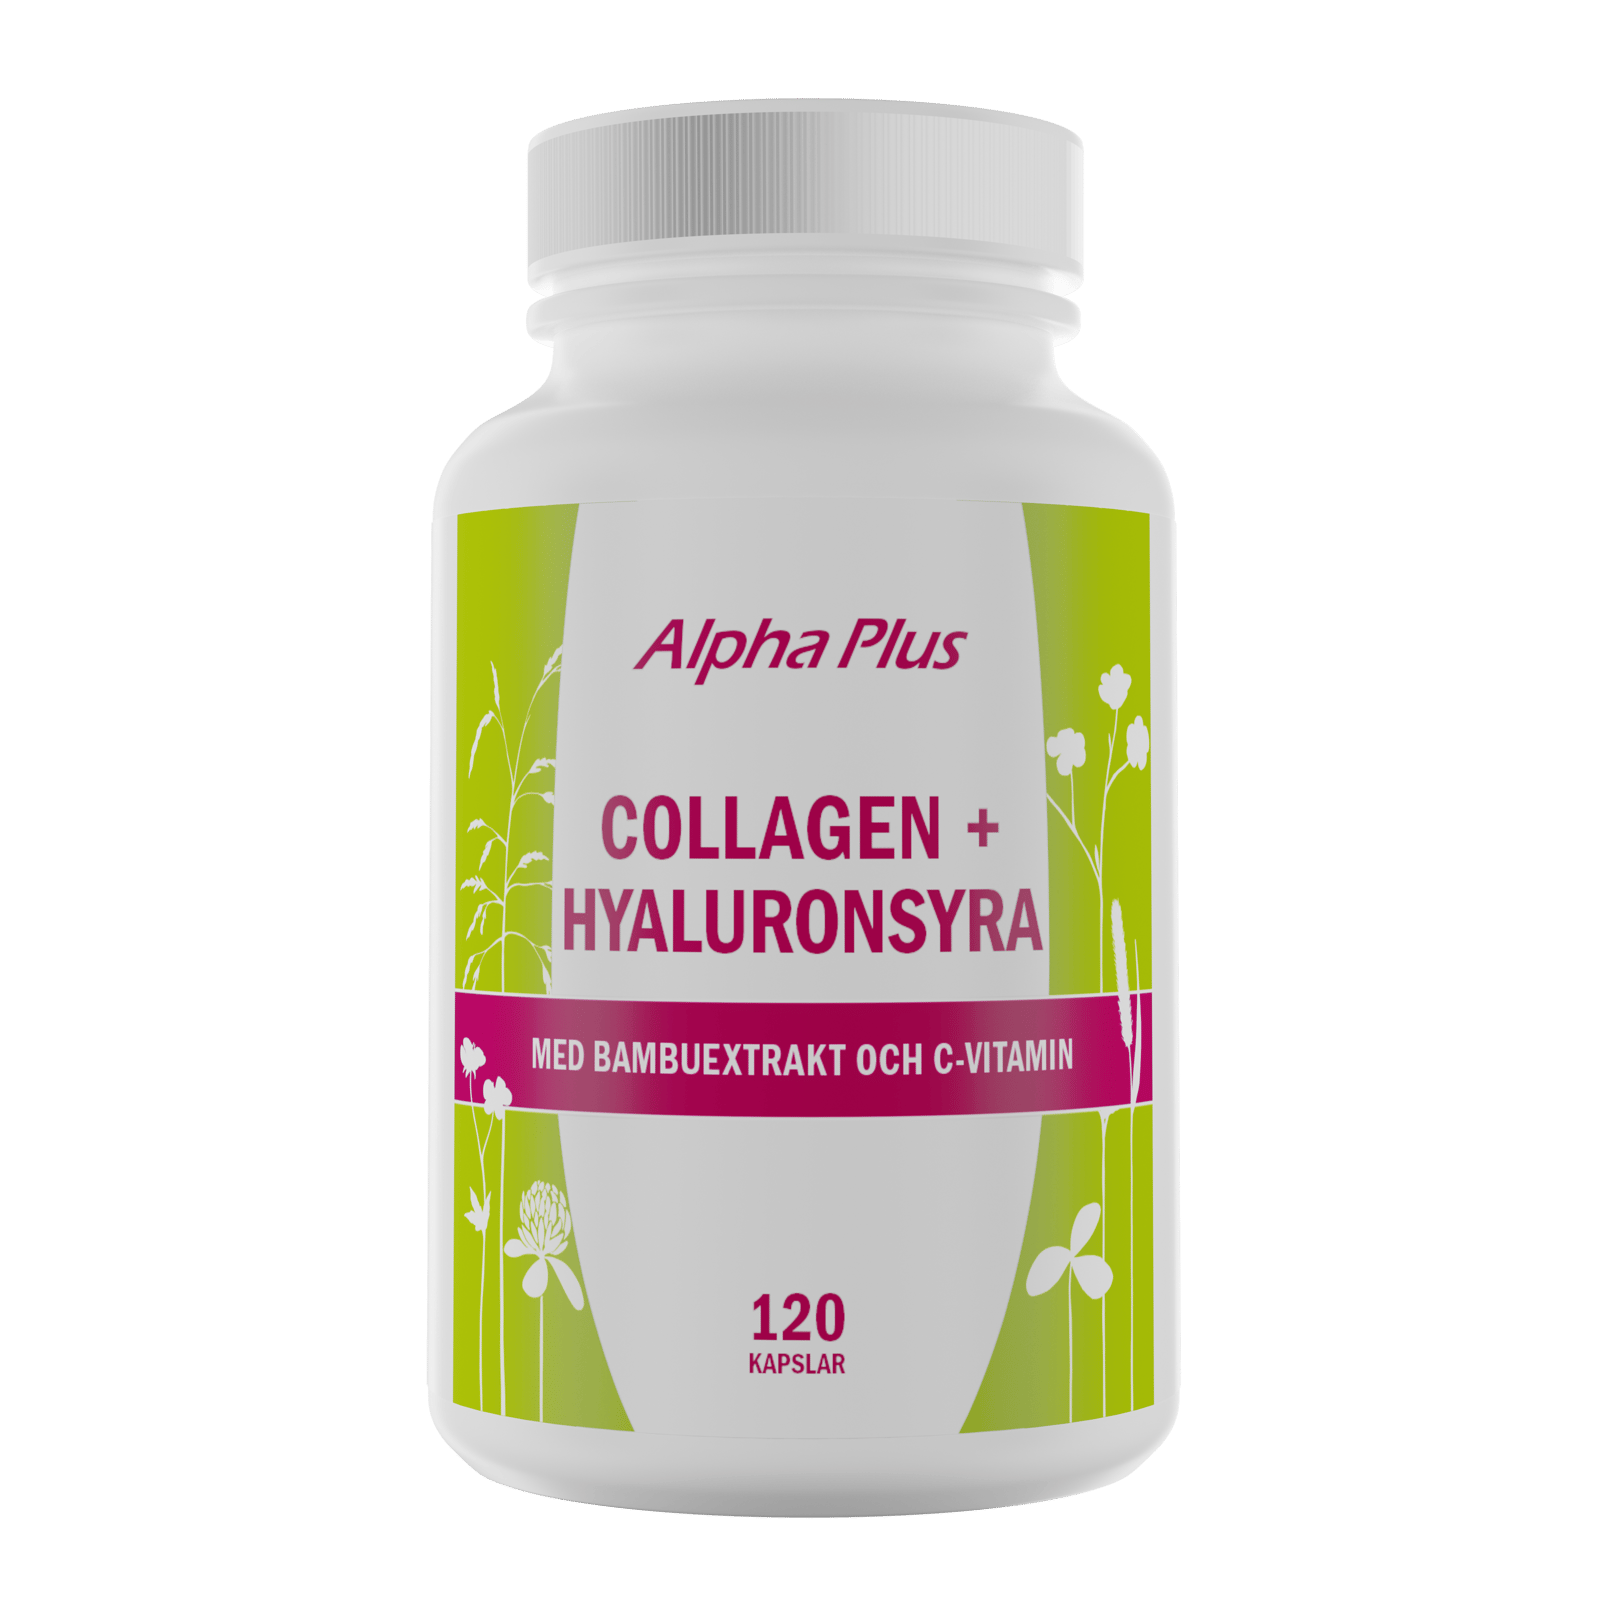 Alpha Plus Collagen + Hyaluronsyra 120 kapslar